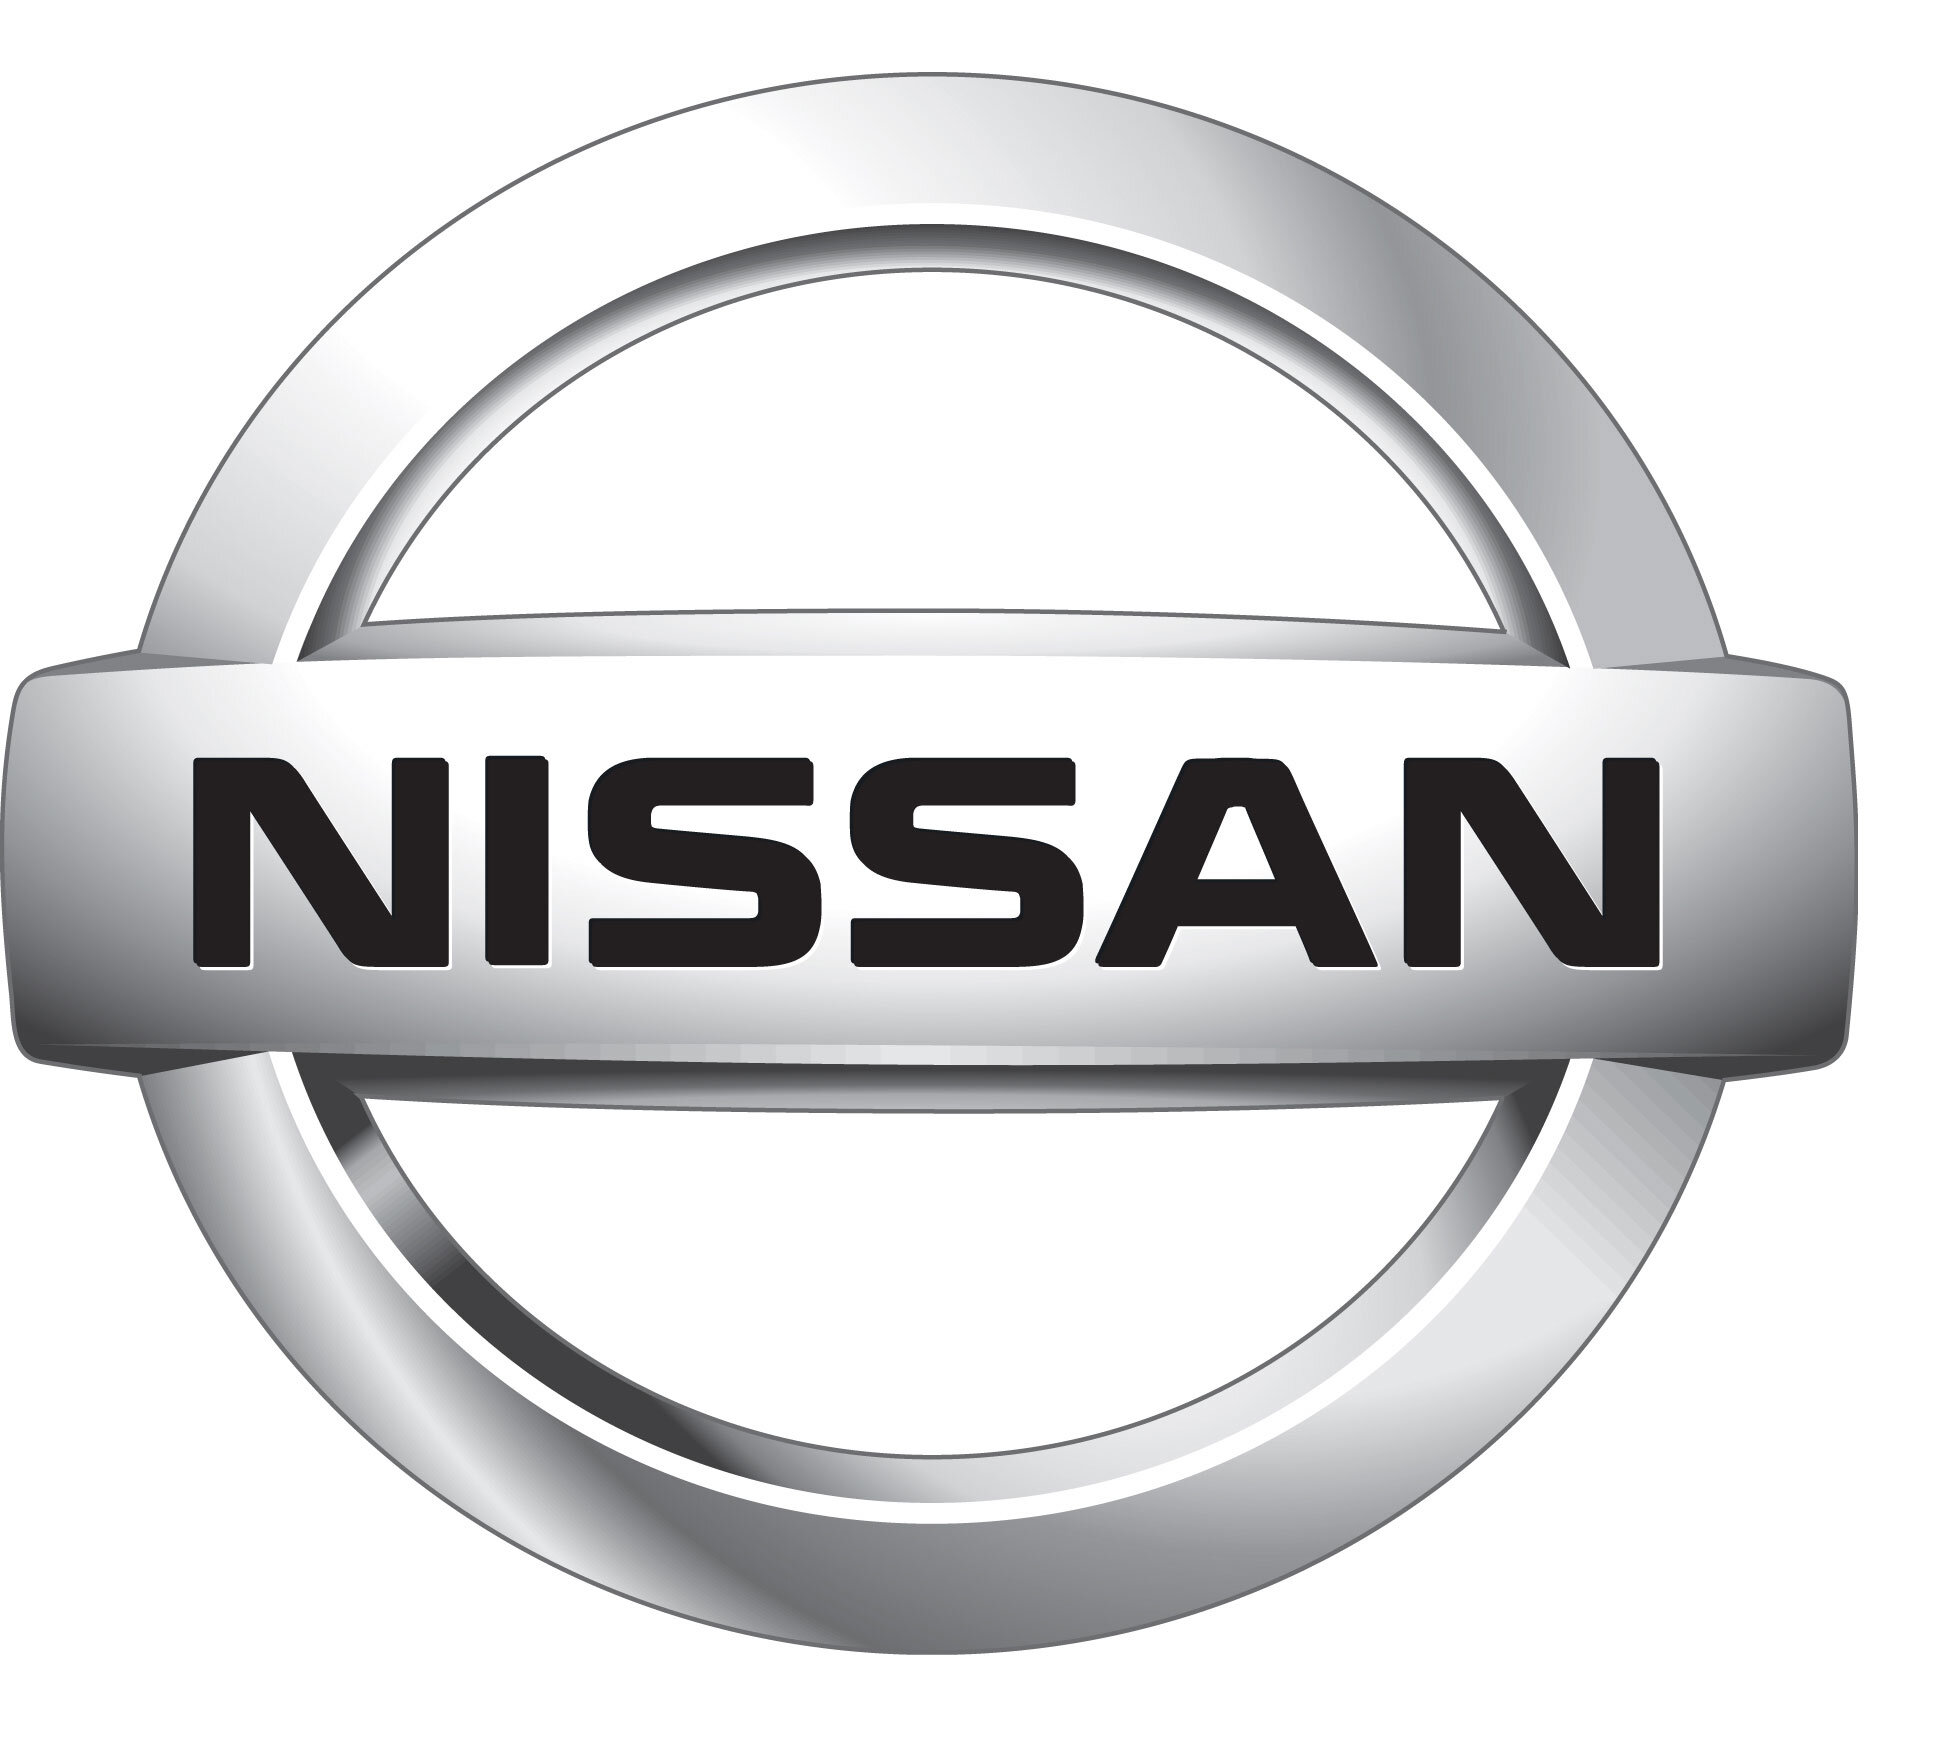 030 Nissan.jpg